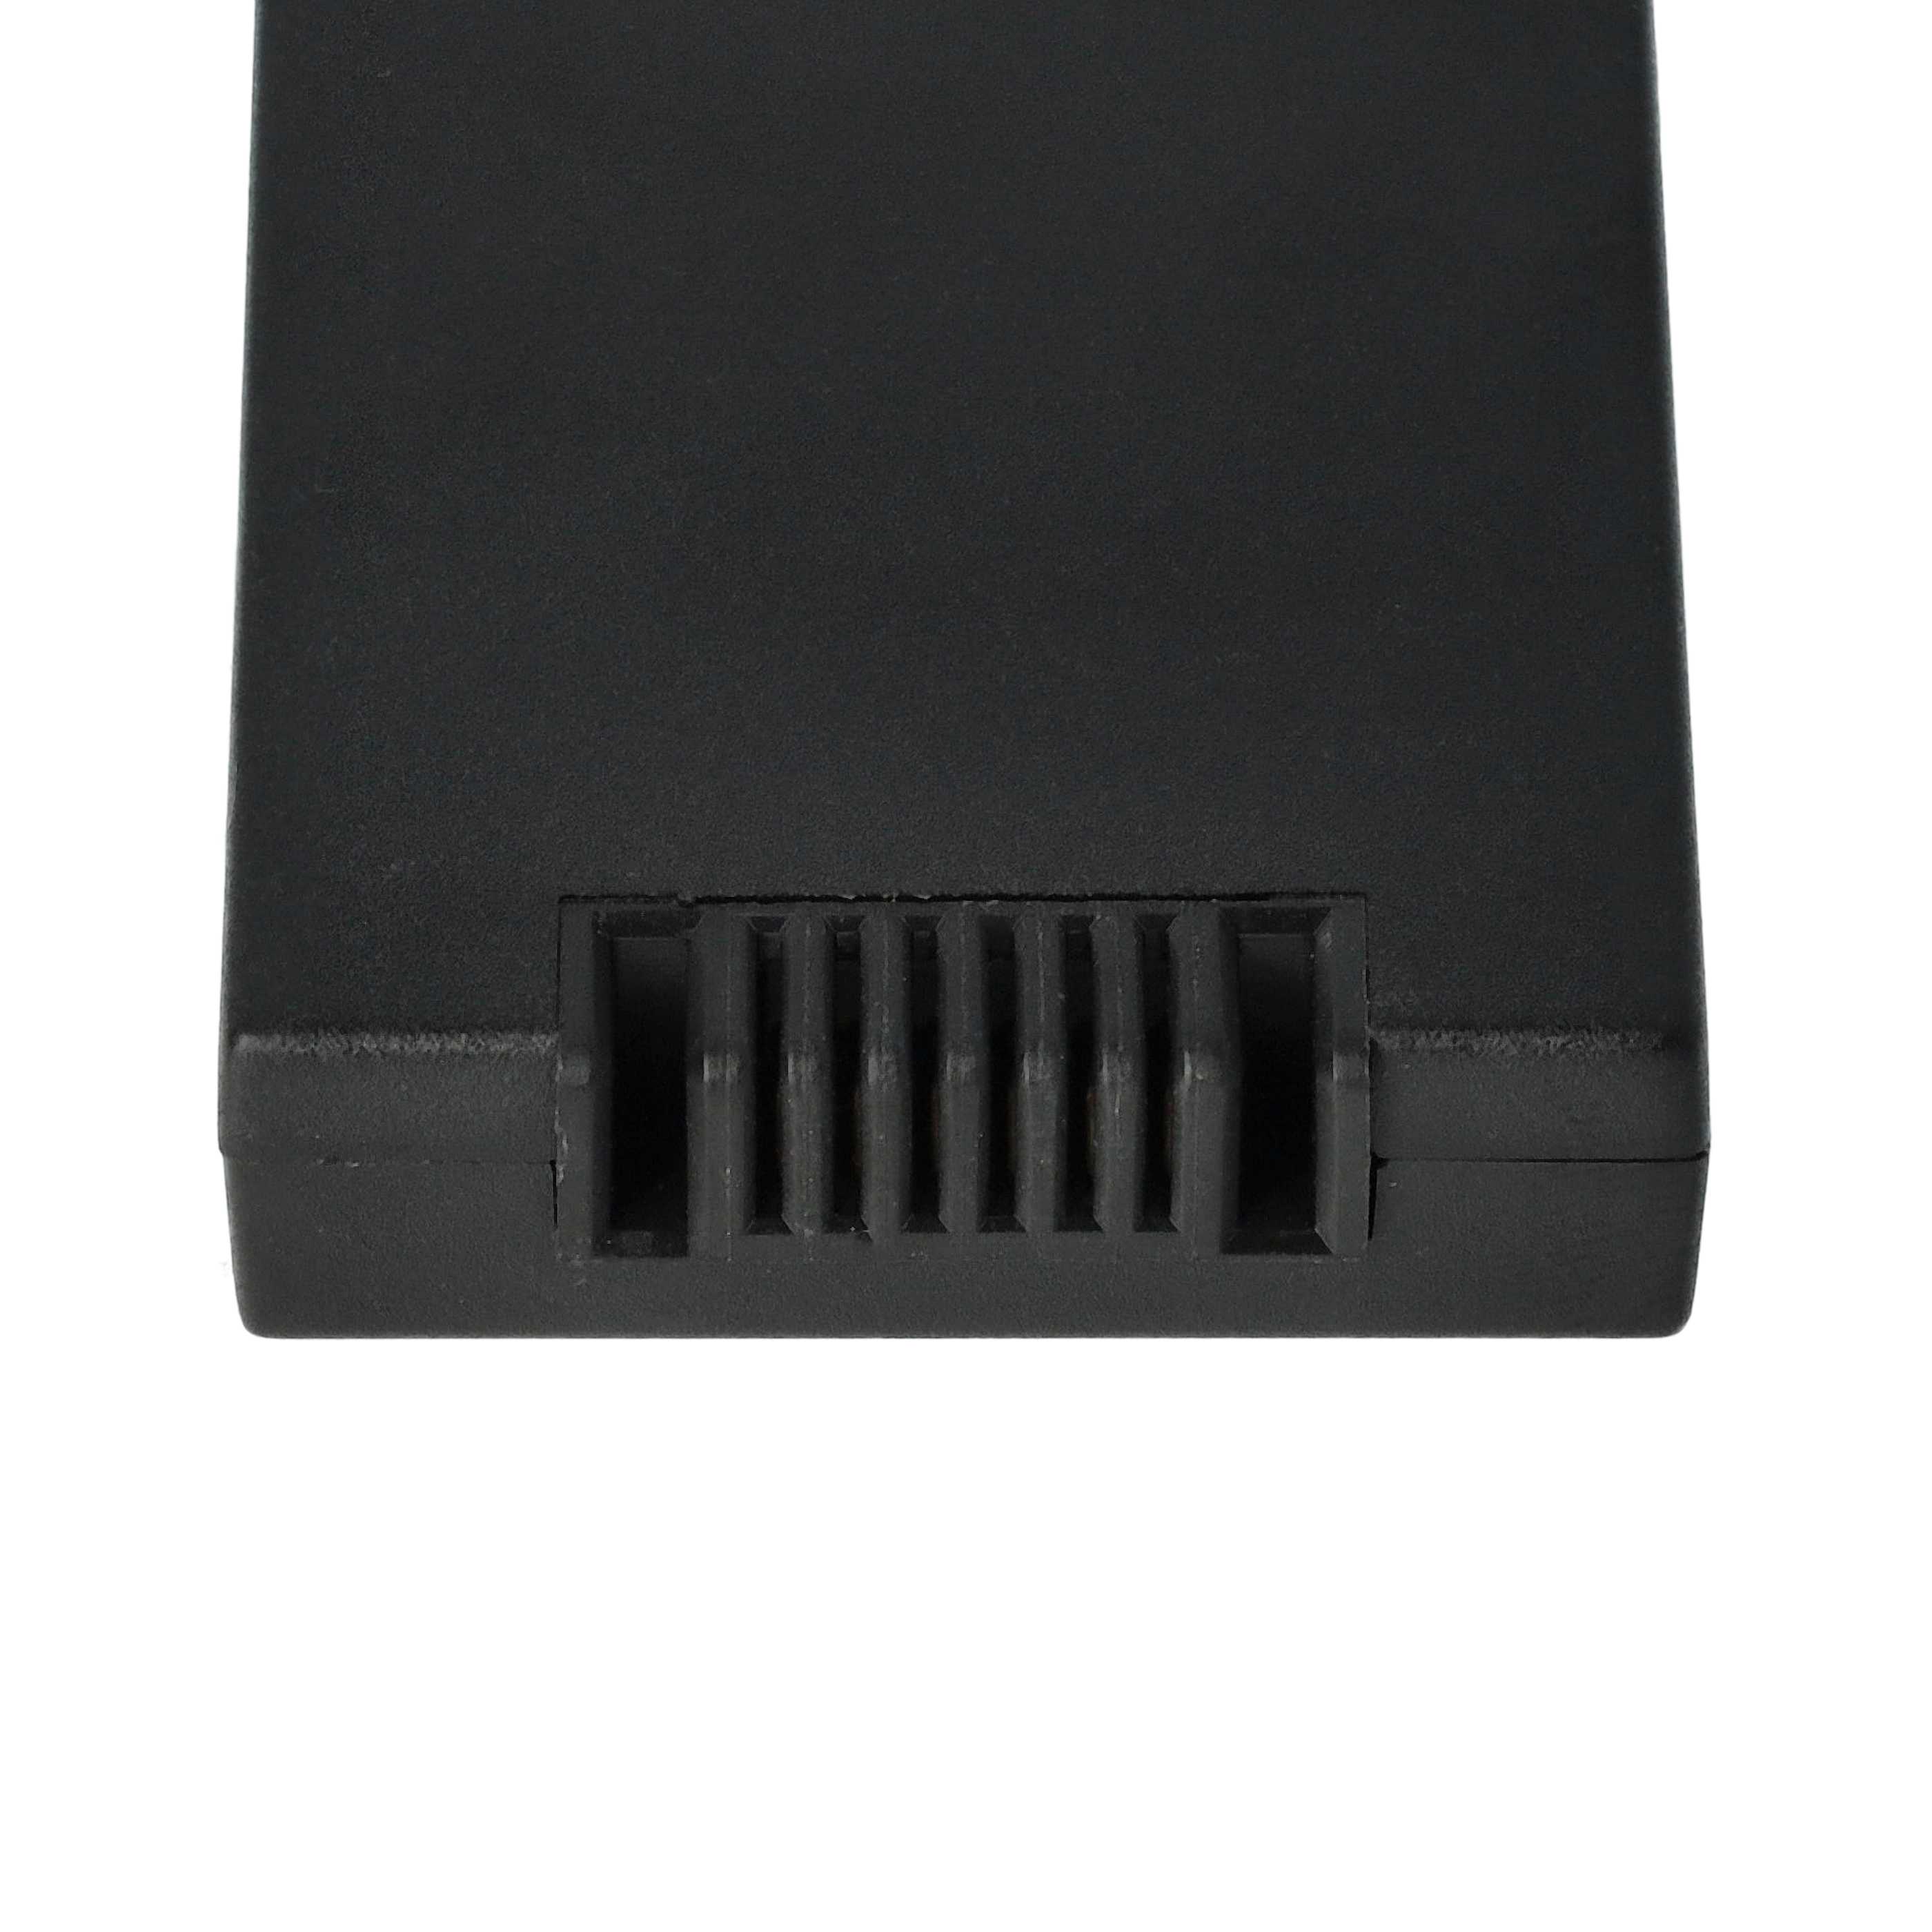 Batería reemplaza Polaroid CZA-05300 para cámara Polaroid - 600 mAh 7,4 V Li-Ion